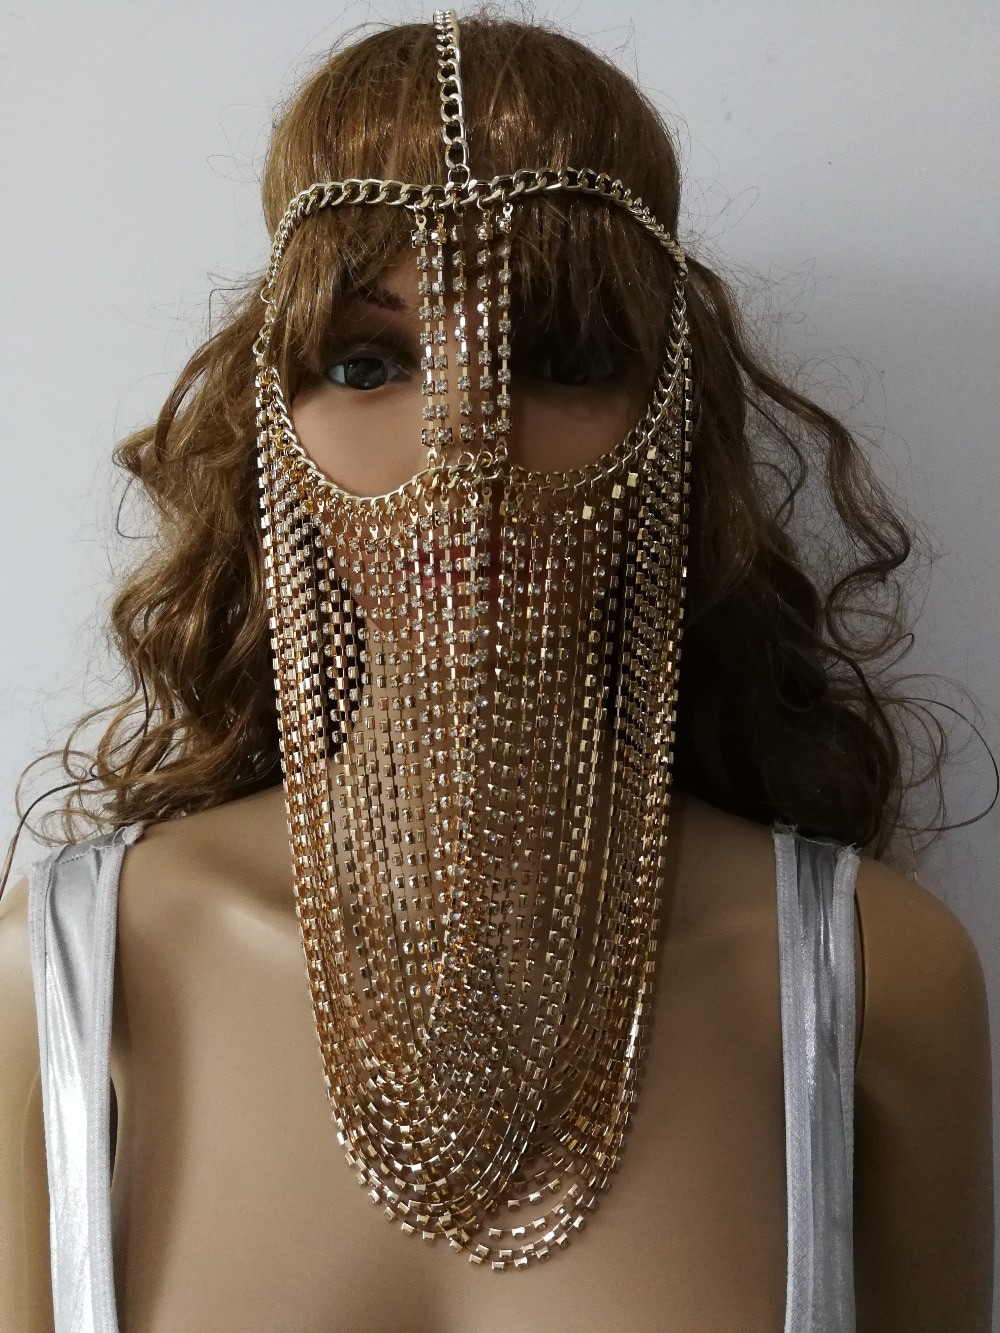 Body Jewelry Face
 NEW STYLE H769 Women Rock Harness Gold Rhinestone Chains